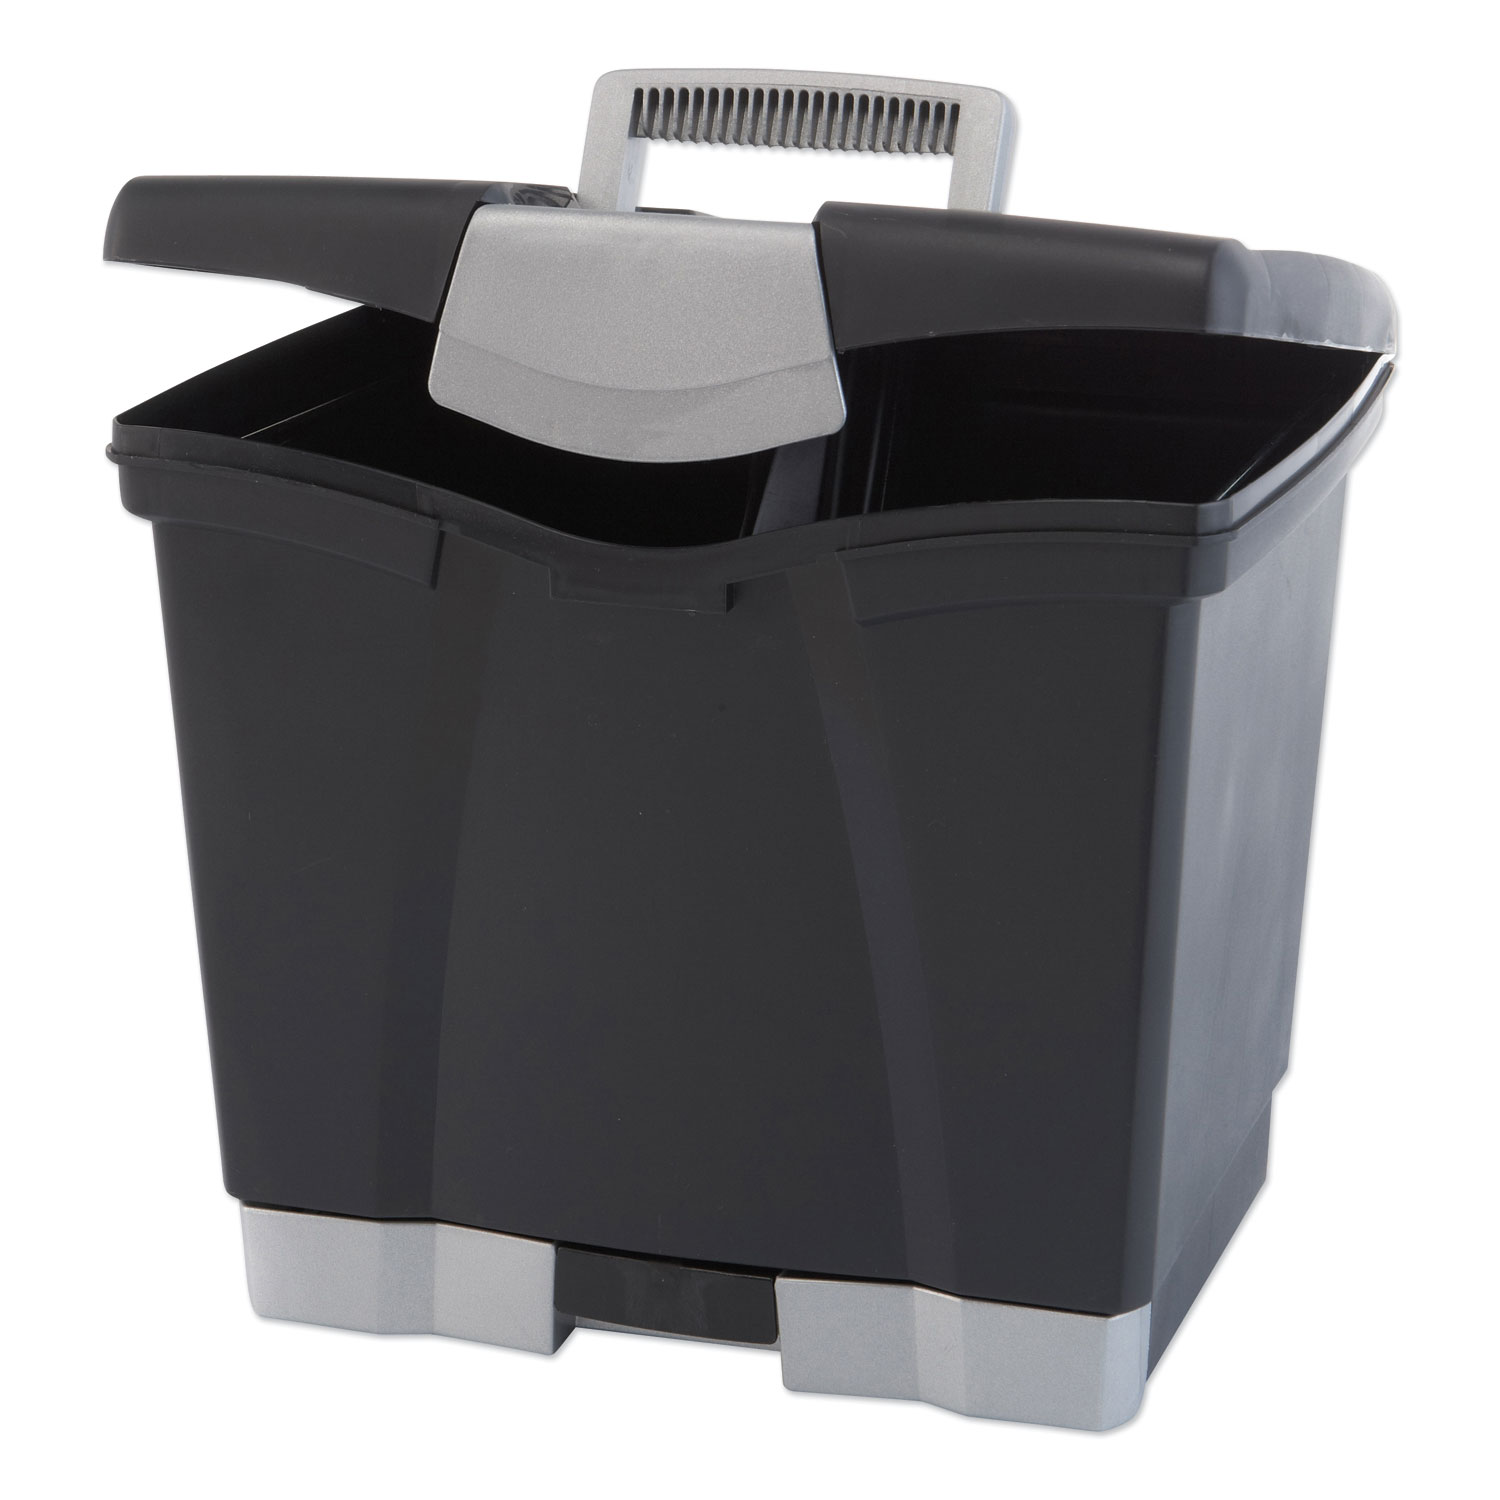  Storex 61523U01C Portable File Box with Drawer, Letter Files, 14 x 11.25 x 14.5, Black (STX61523U01C) 